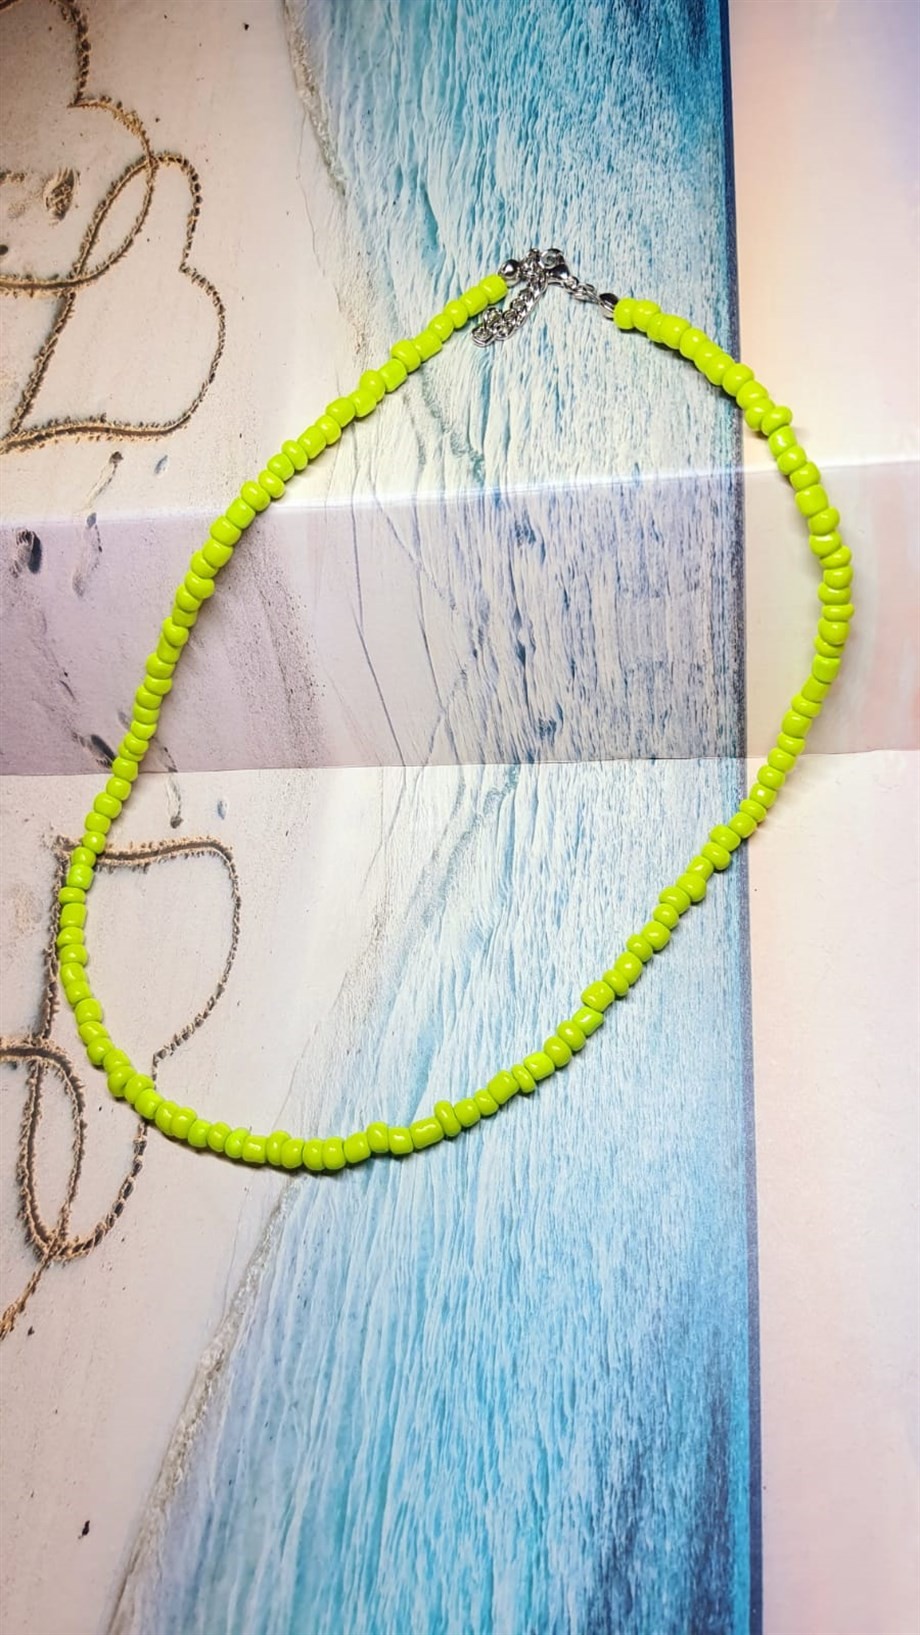 Female peanut green neon color bead necklace